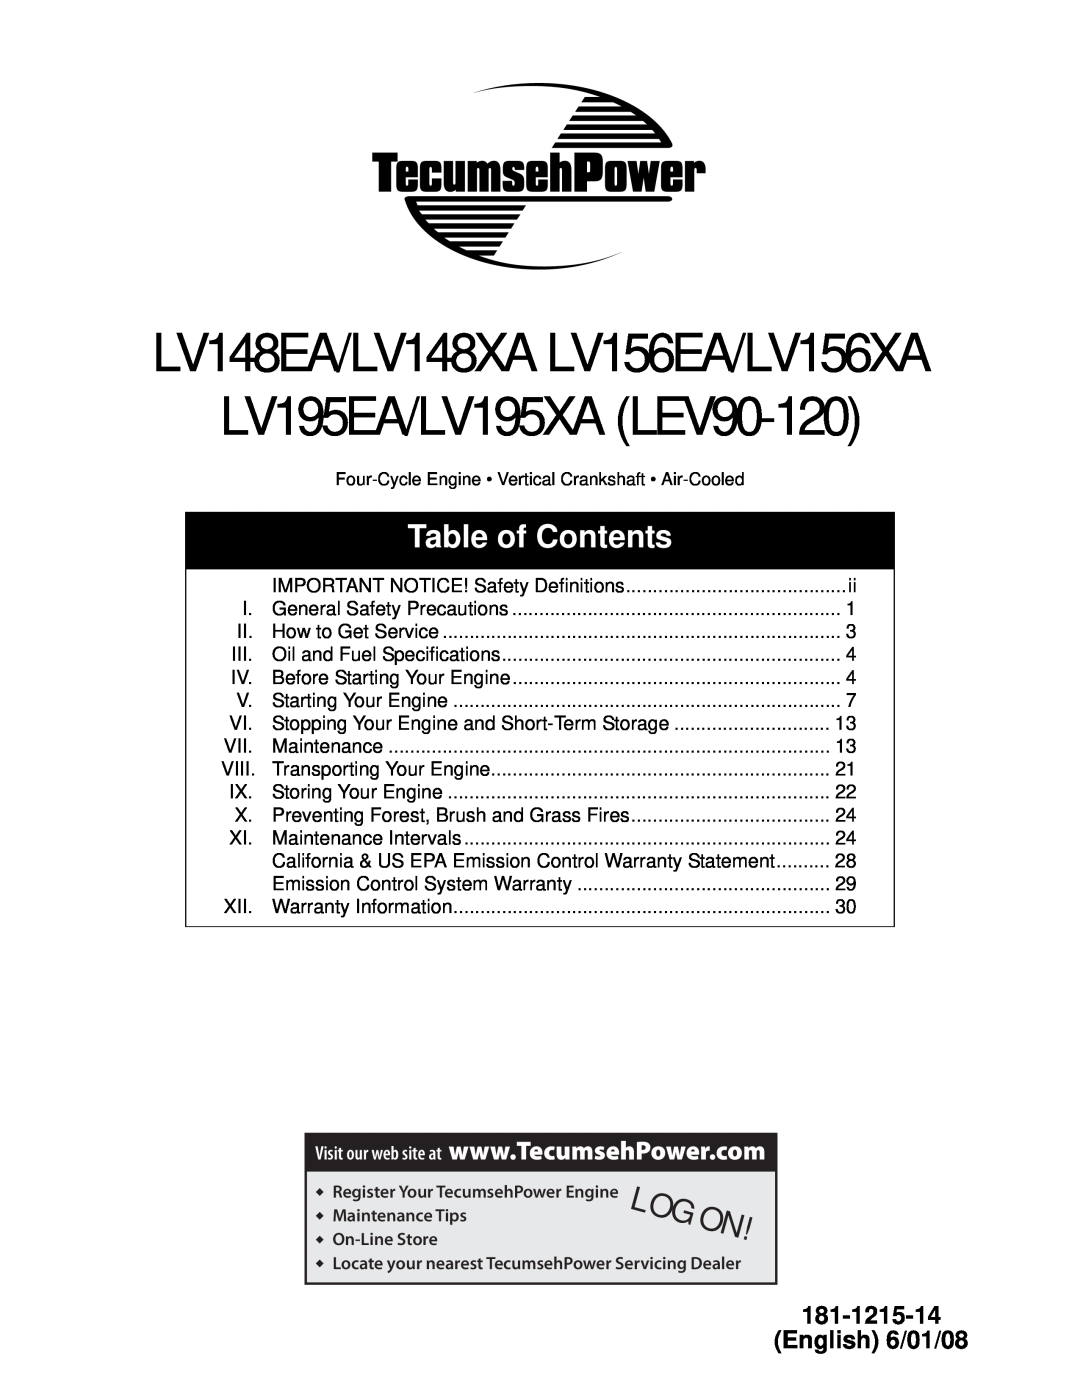 Tecumseh specifications English 6/01/08, LV148EA/LV148XA LV156EA/LV156XA, LV195EA/LV195XA LEV90-120, Table of Contents 